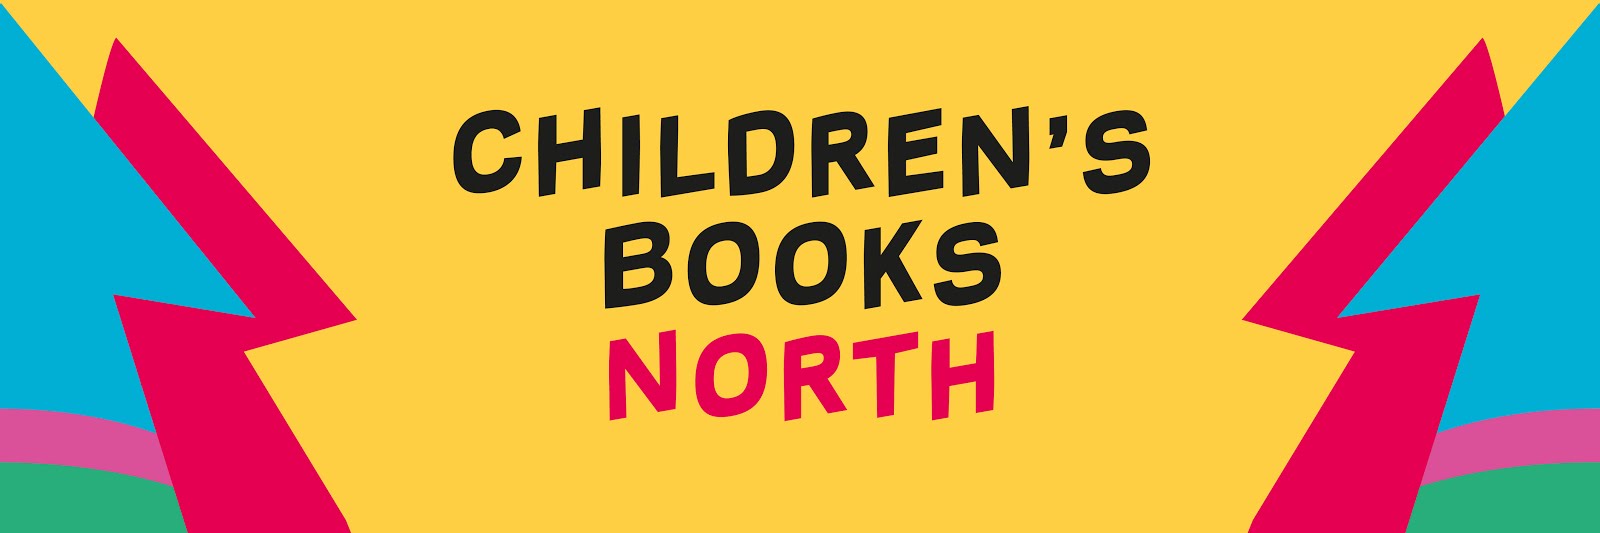 Children's Books North